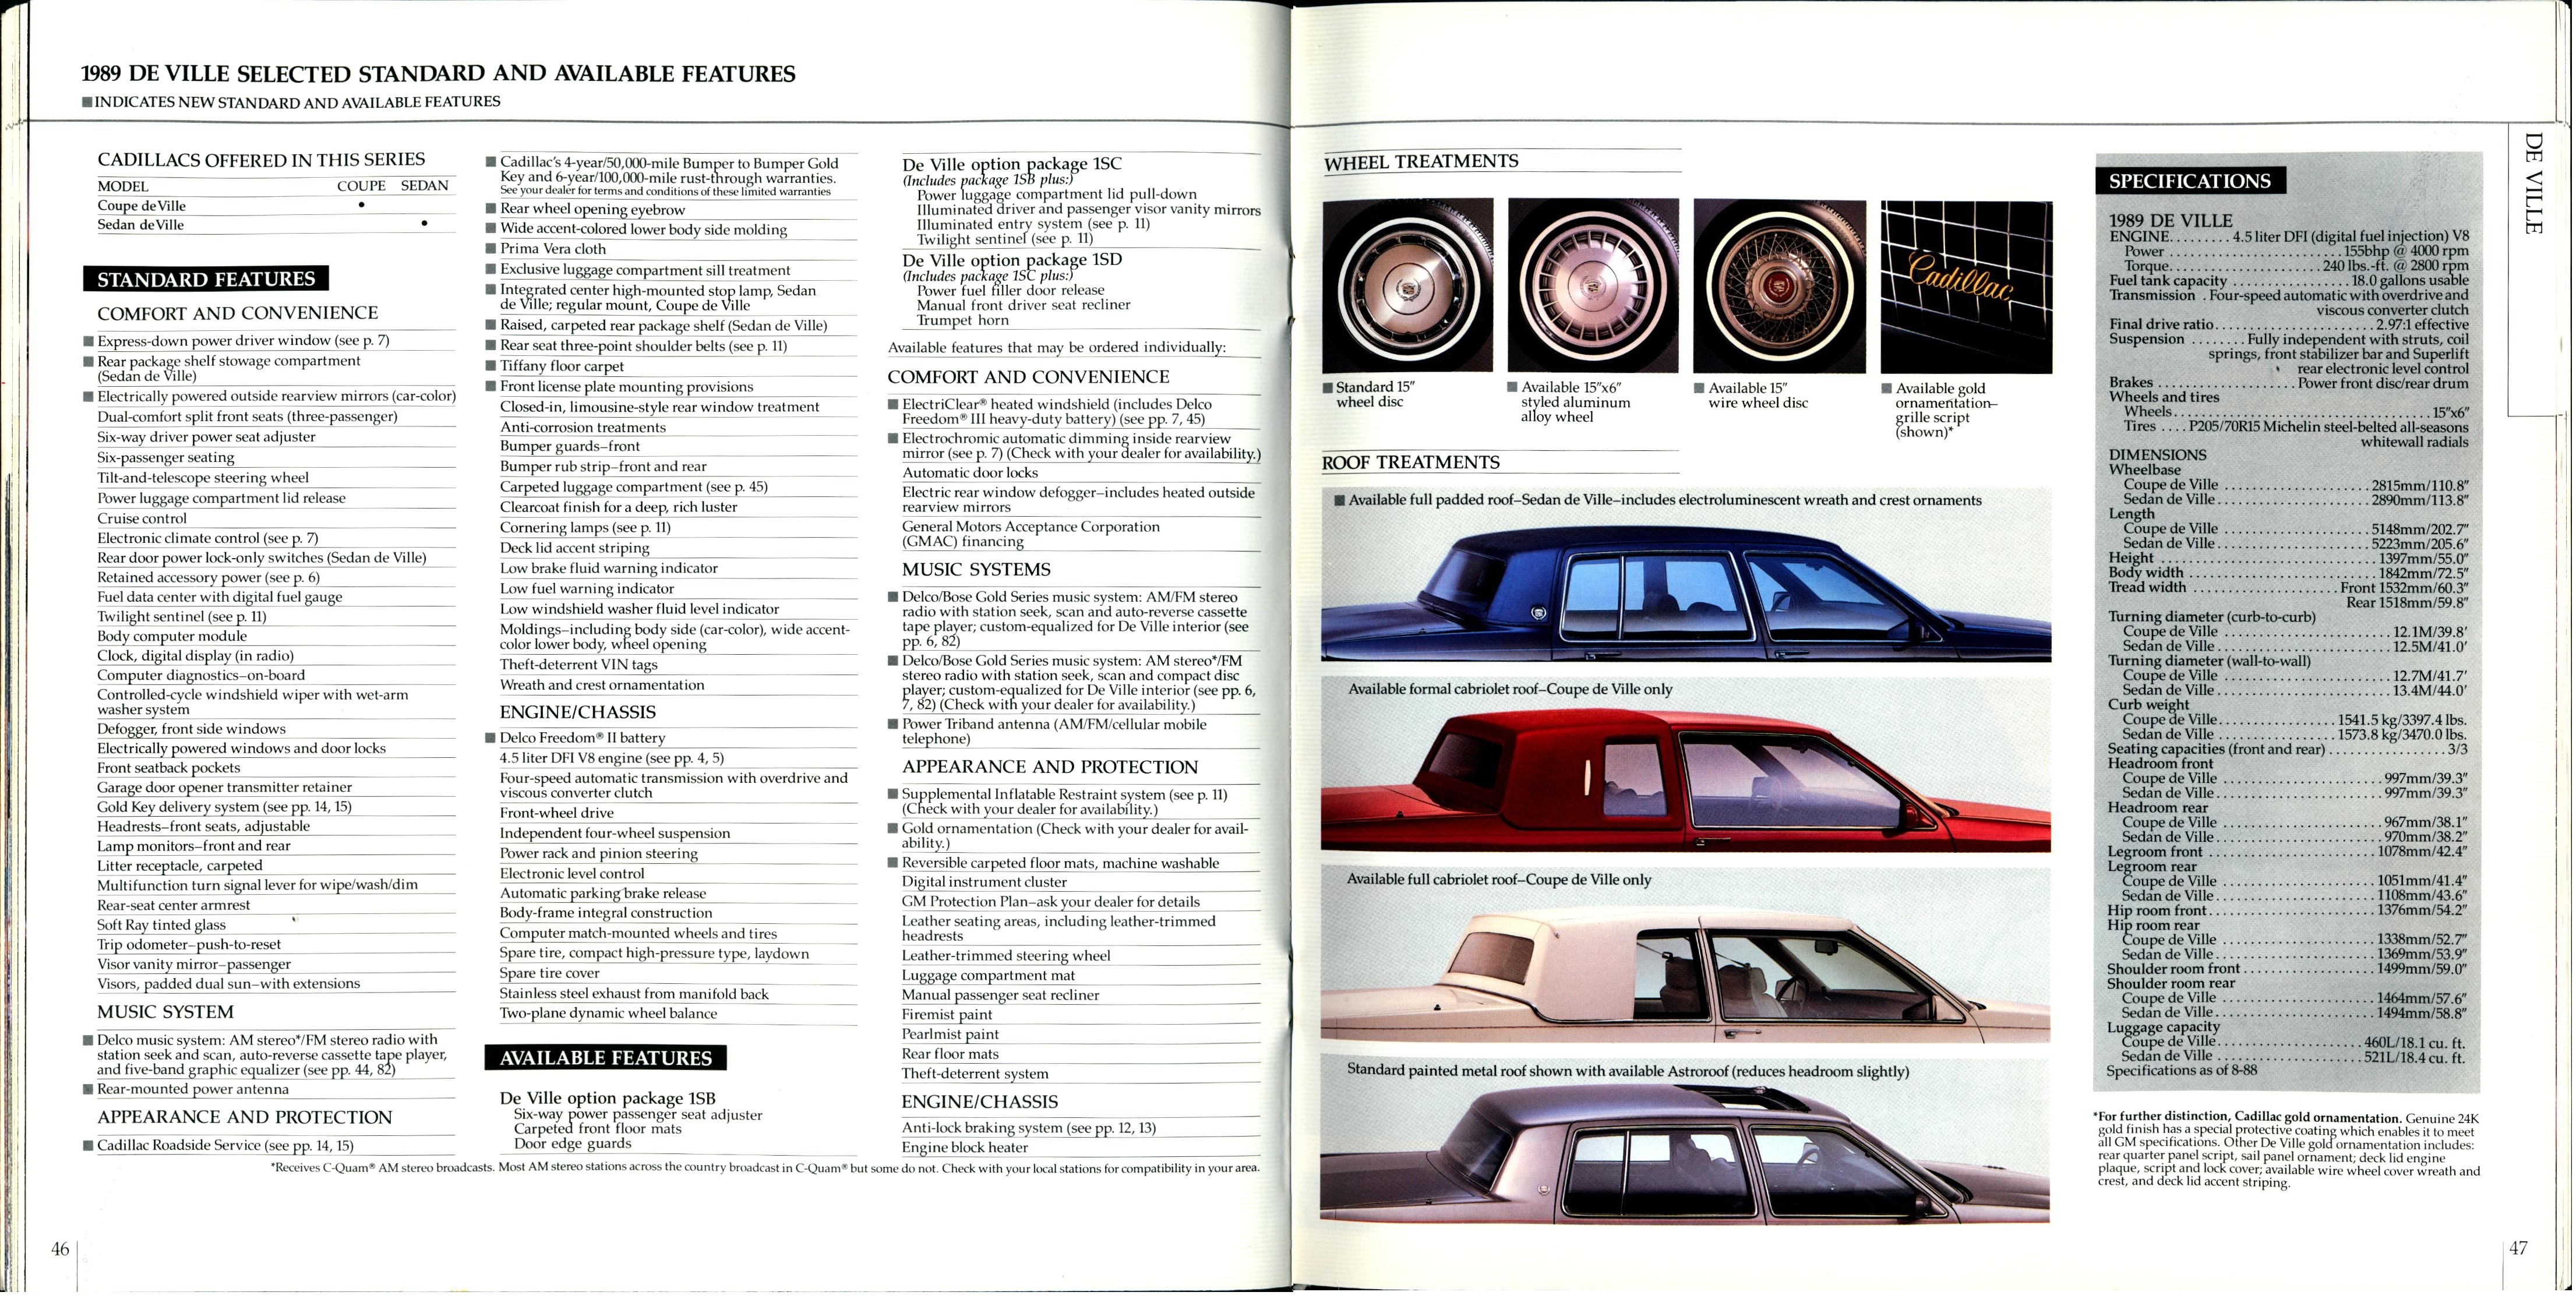 1989 Cadillac Full Line Prestige Brochure 46-47